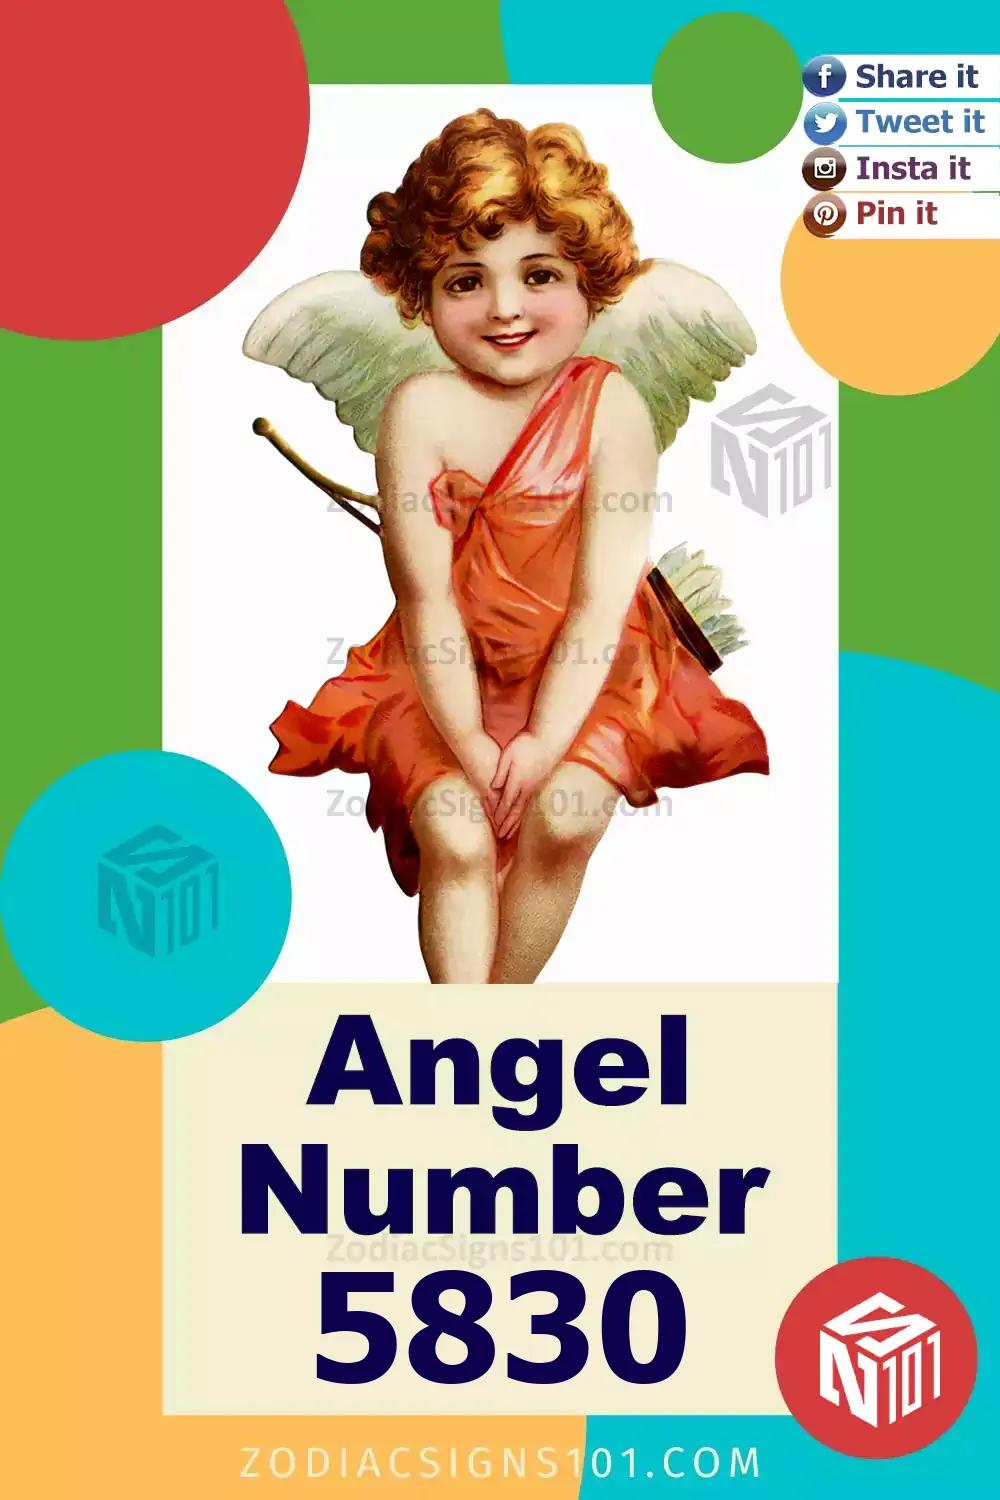 5830-Angel-Number-Meaning.jpg